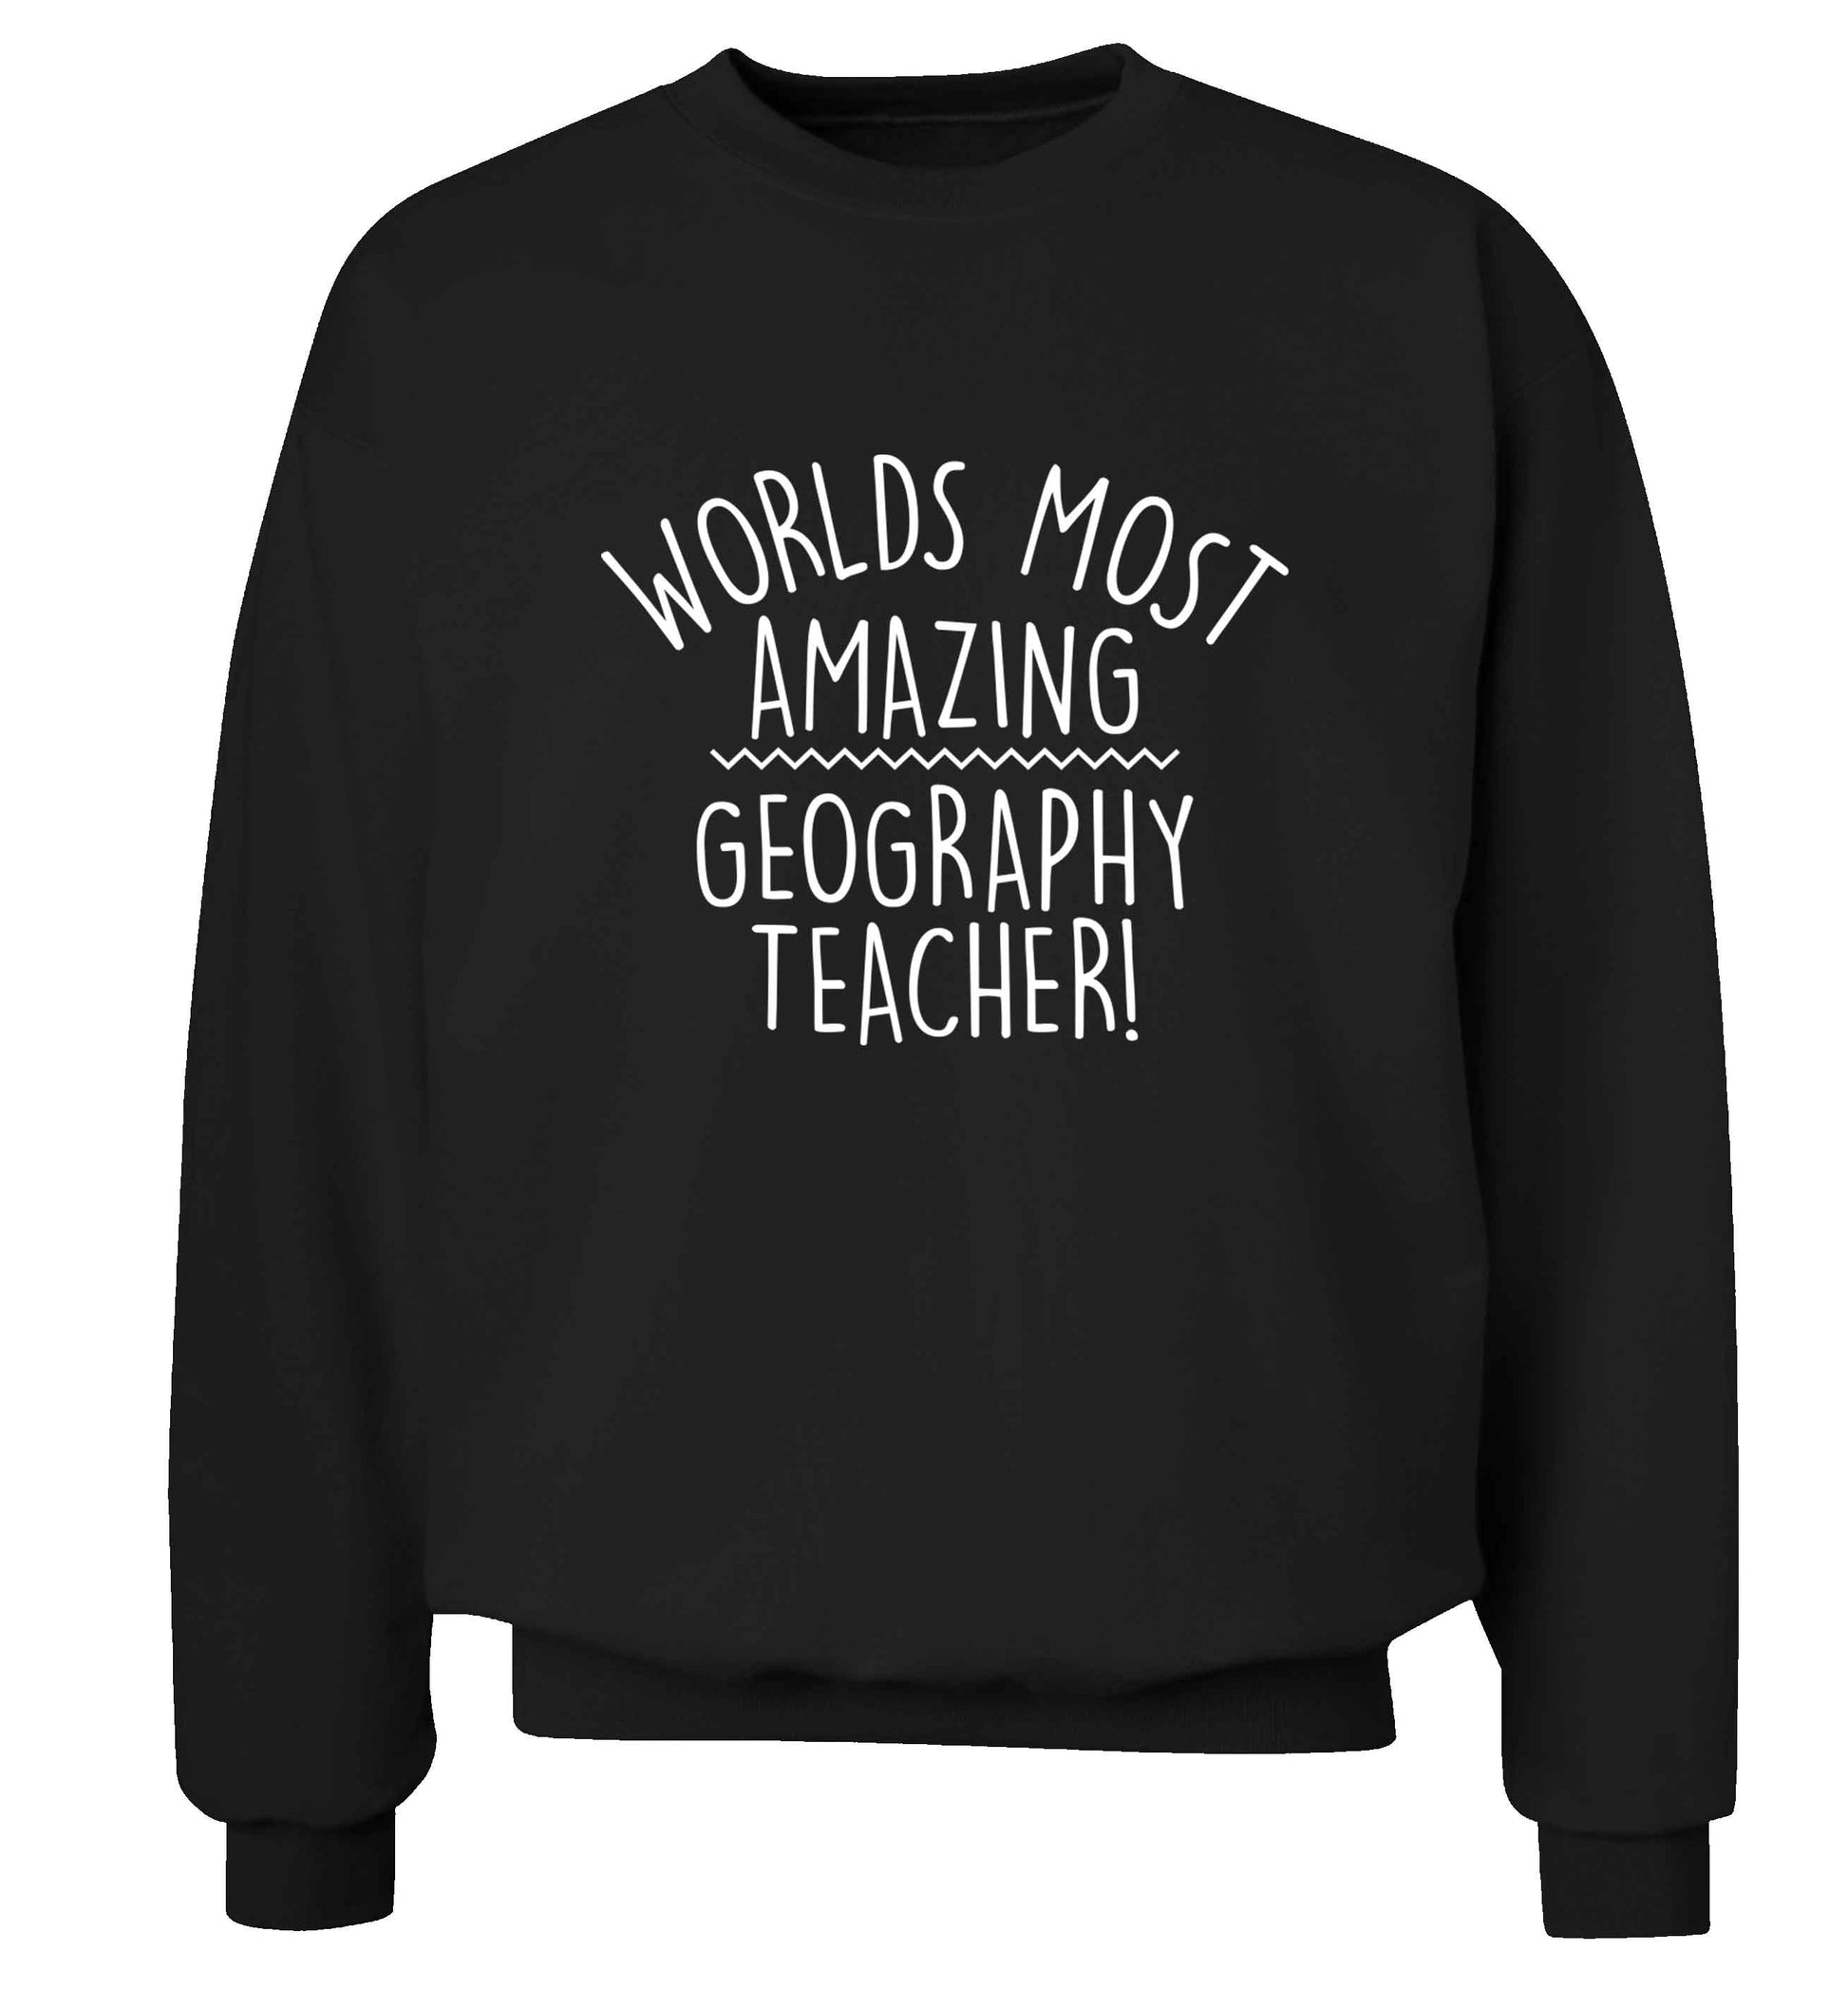 Worlds most amazing geography teacher adult's unisex black sweater 2XL